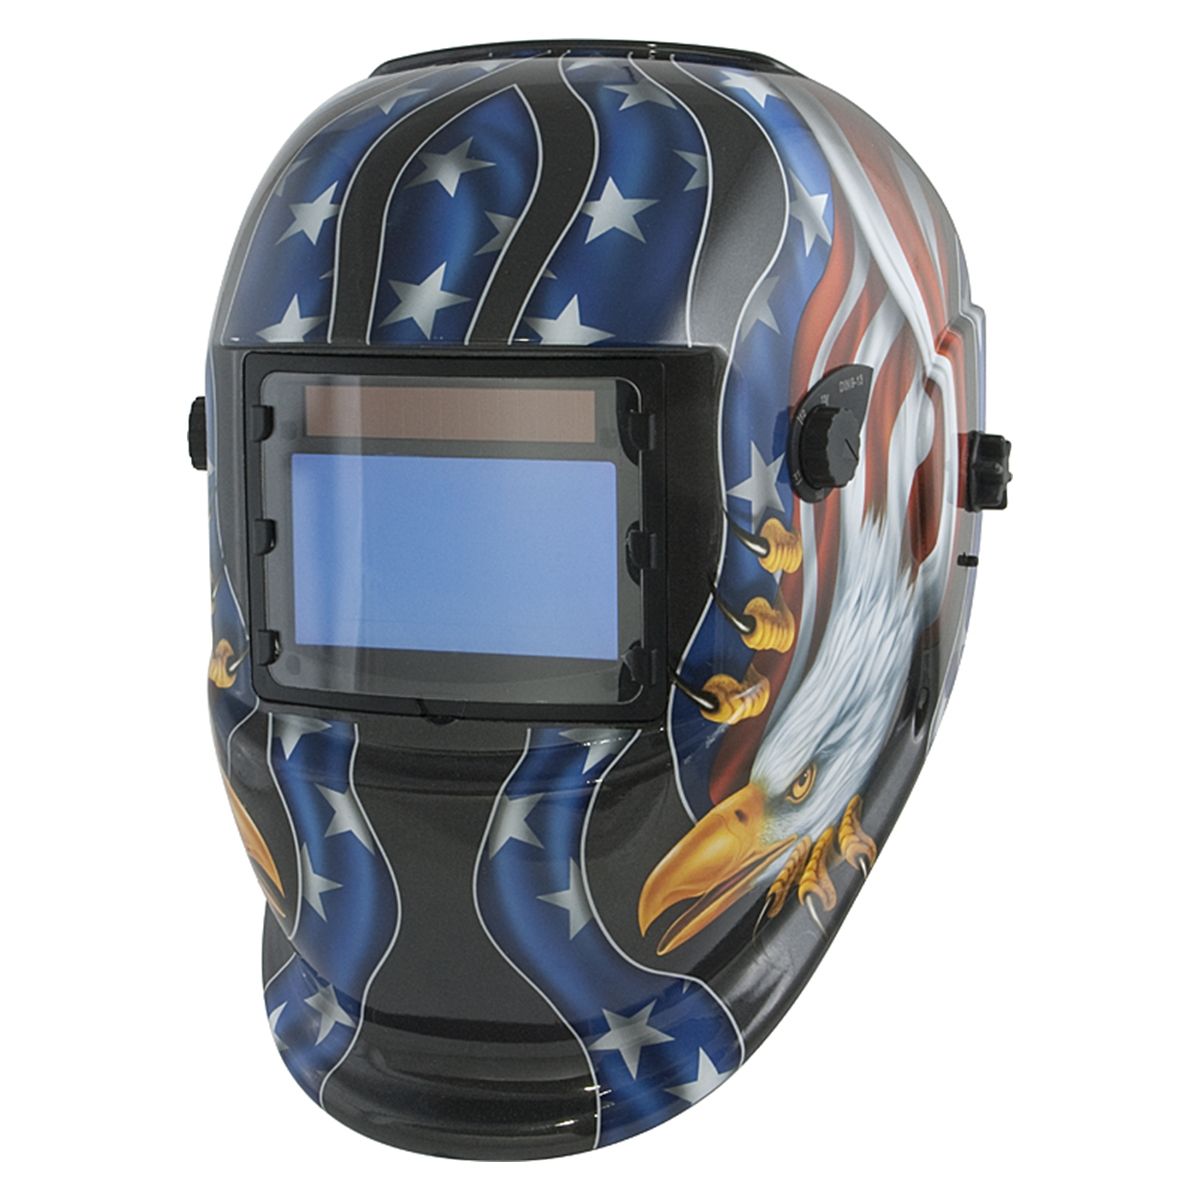 USA Patriotic Wide View Solar Powered Auto Dark Welding Helmet